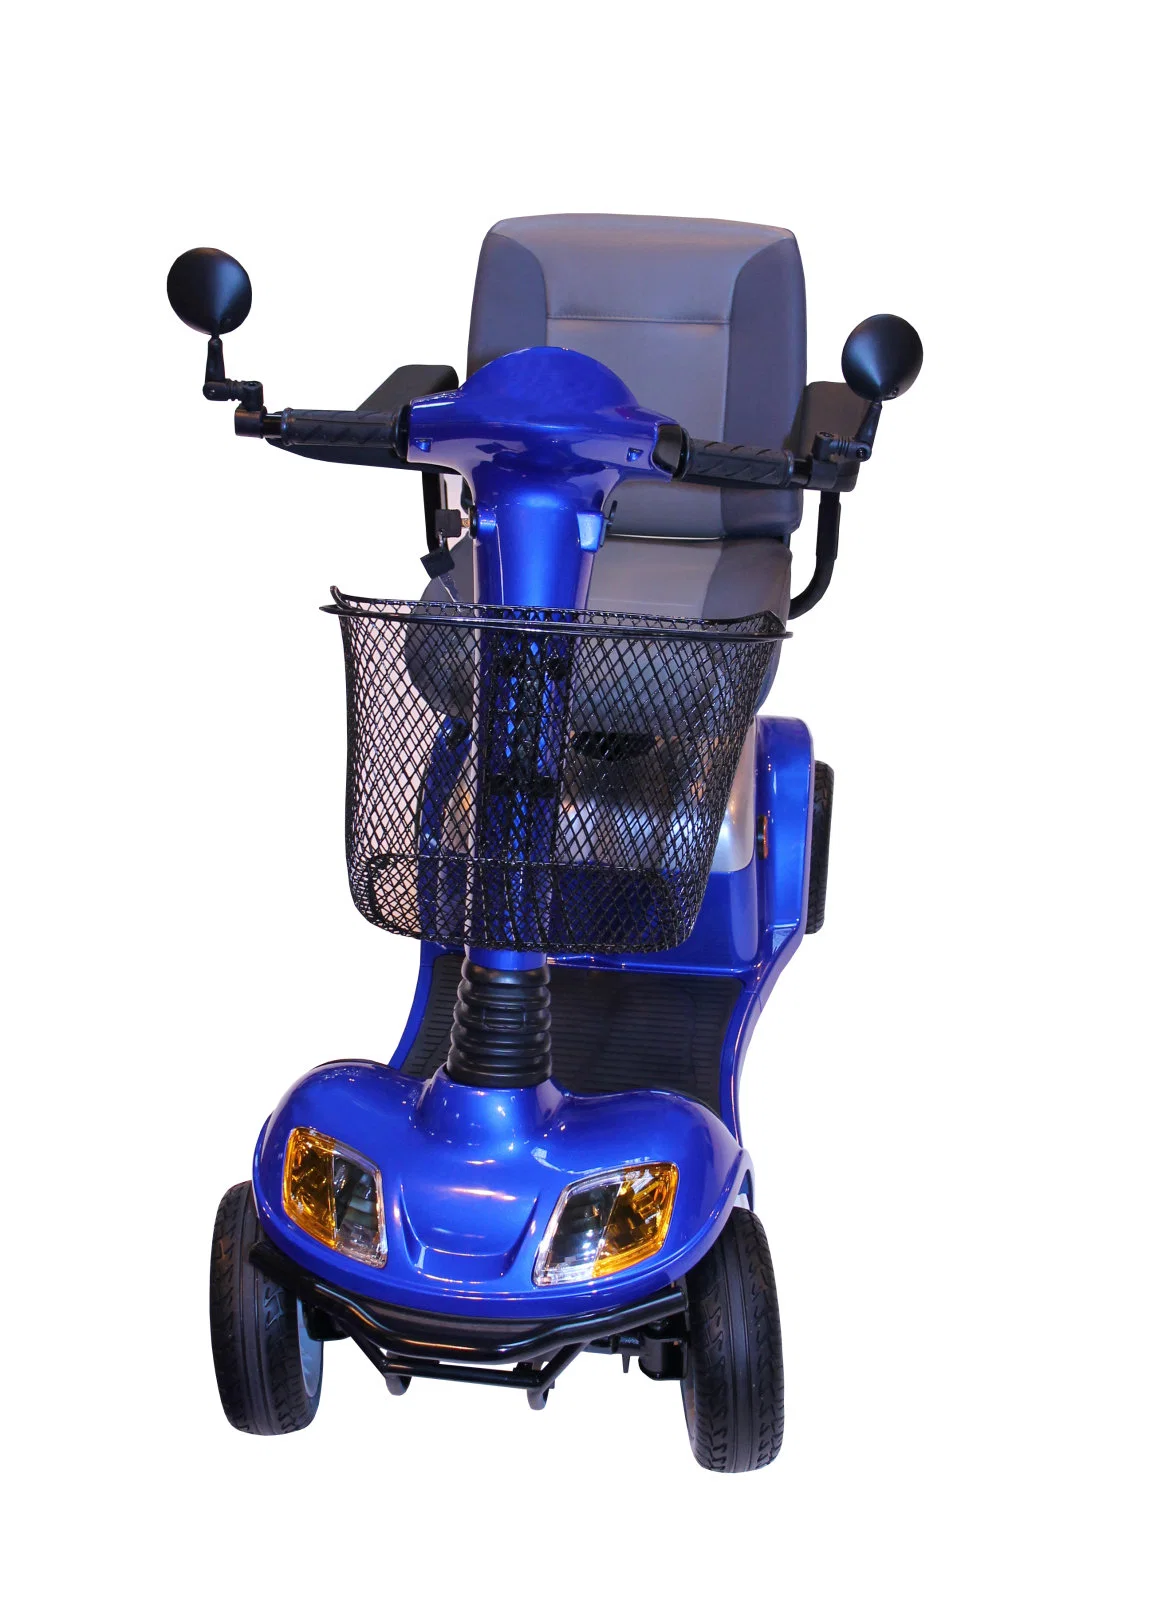 New Car Motorrad Dreirad Fahrrad Schmutz Mobilität Zubehör Fahrrad Elektrisch Roller mit CE